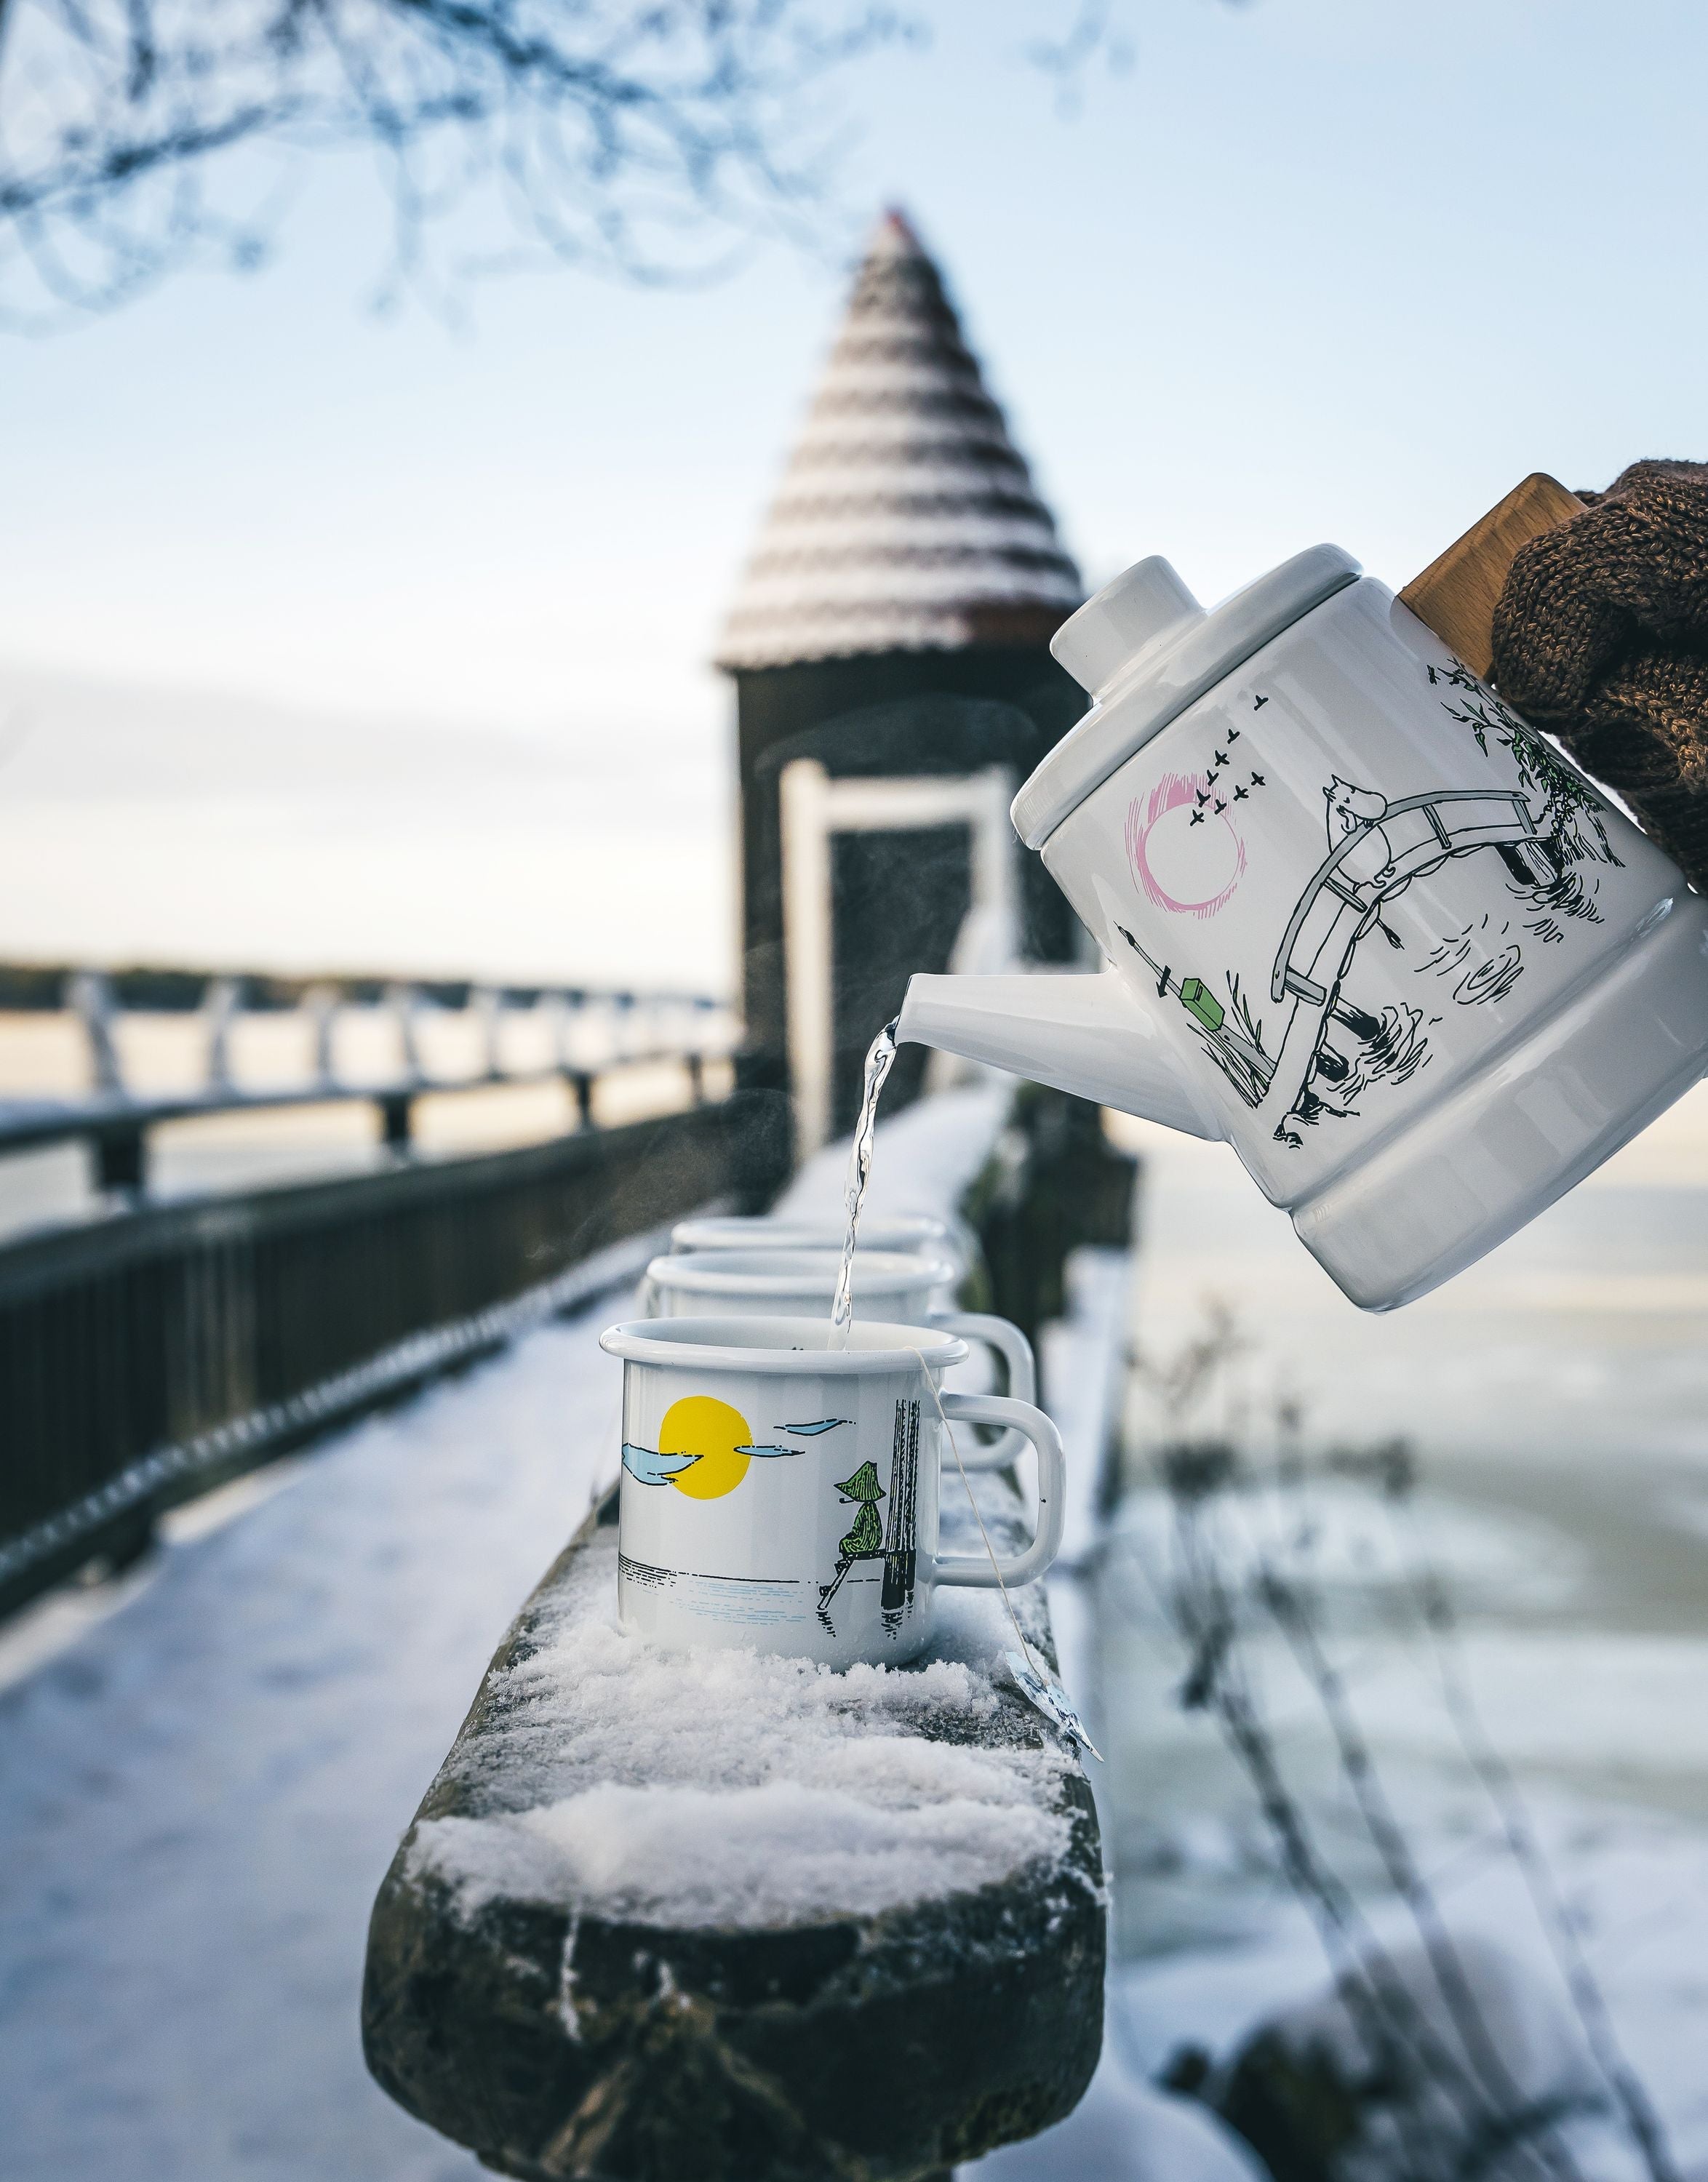 Muurla Moomin Originale Emaille Kaffeekanne vermisst dich